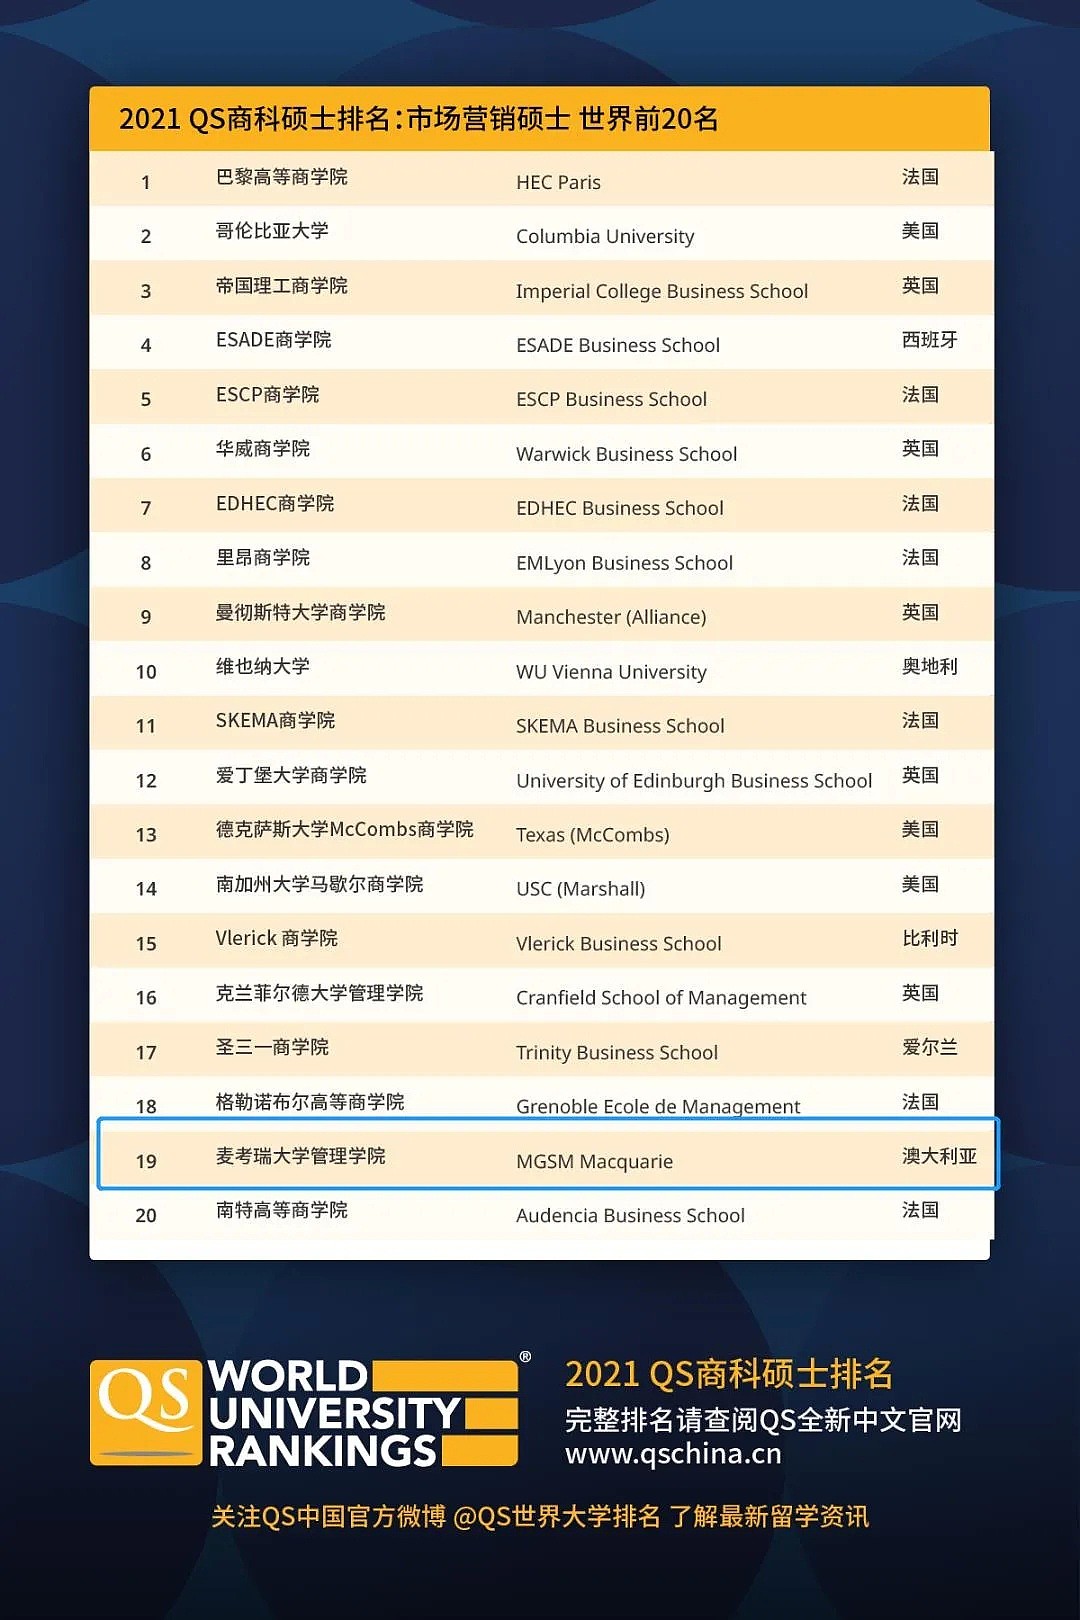 2021QS全球商科硕士院校排名发布！澳洲多所高校榜上有名（组图） - 7